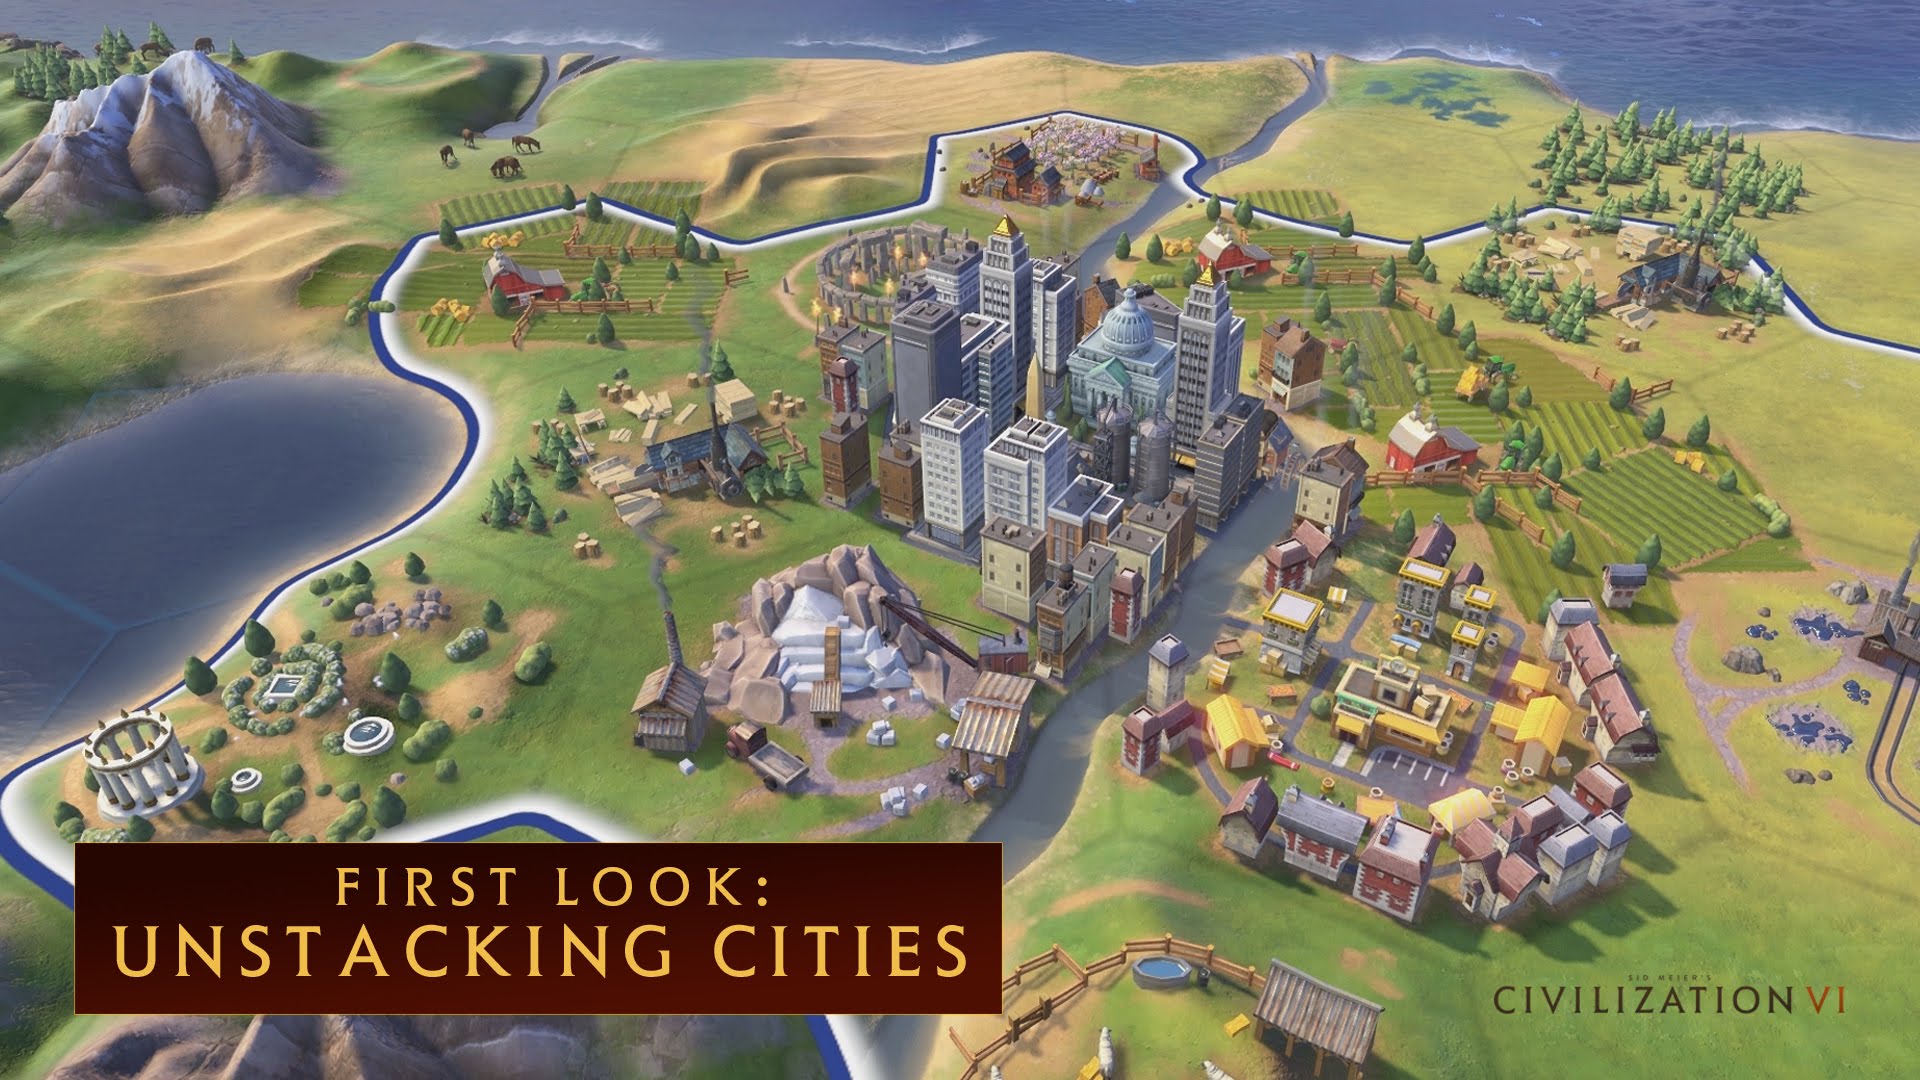 CIVILIZATION VI - First Look: Unstacking Cities - International Version